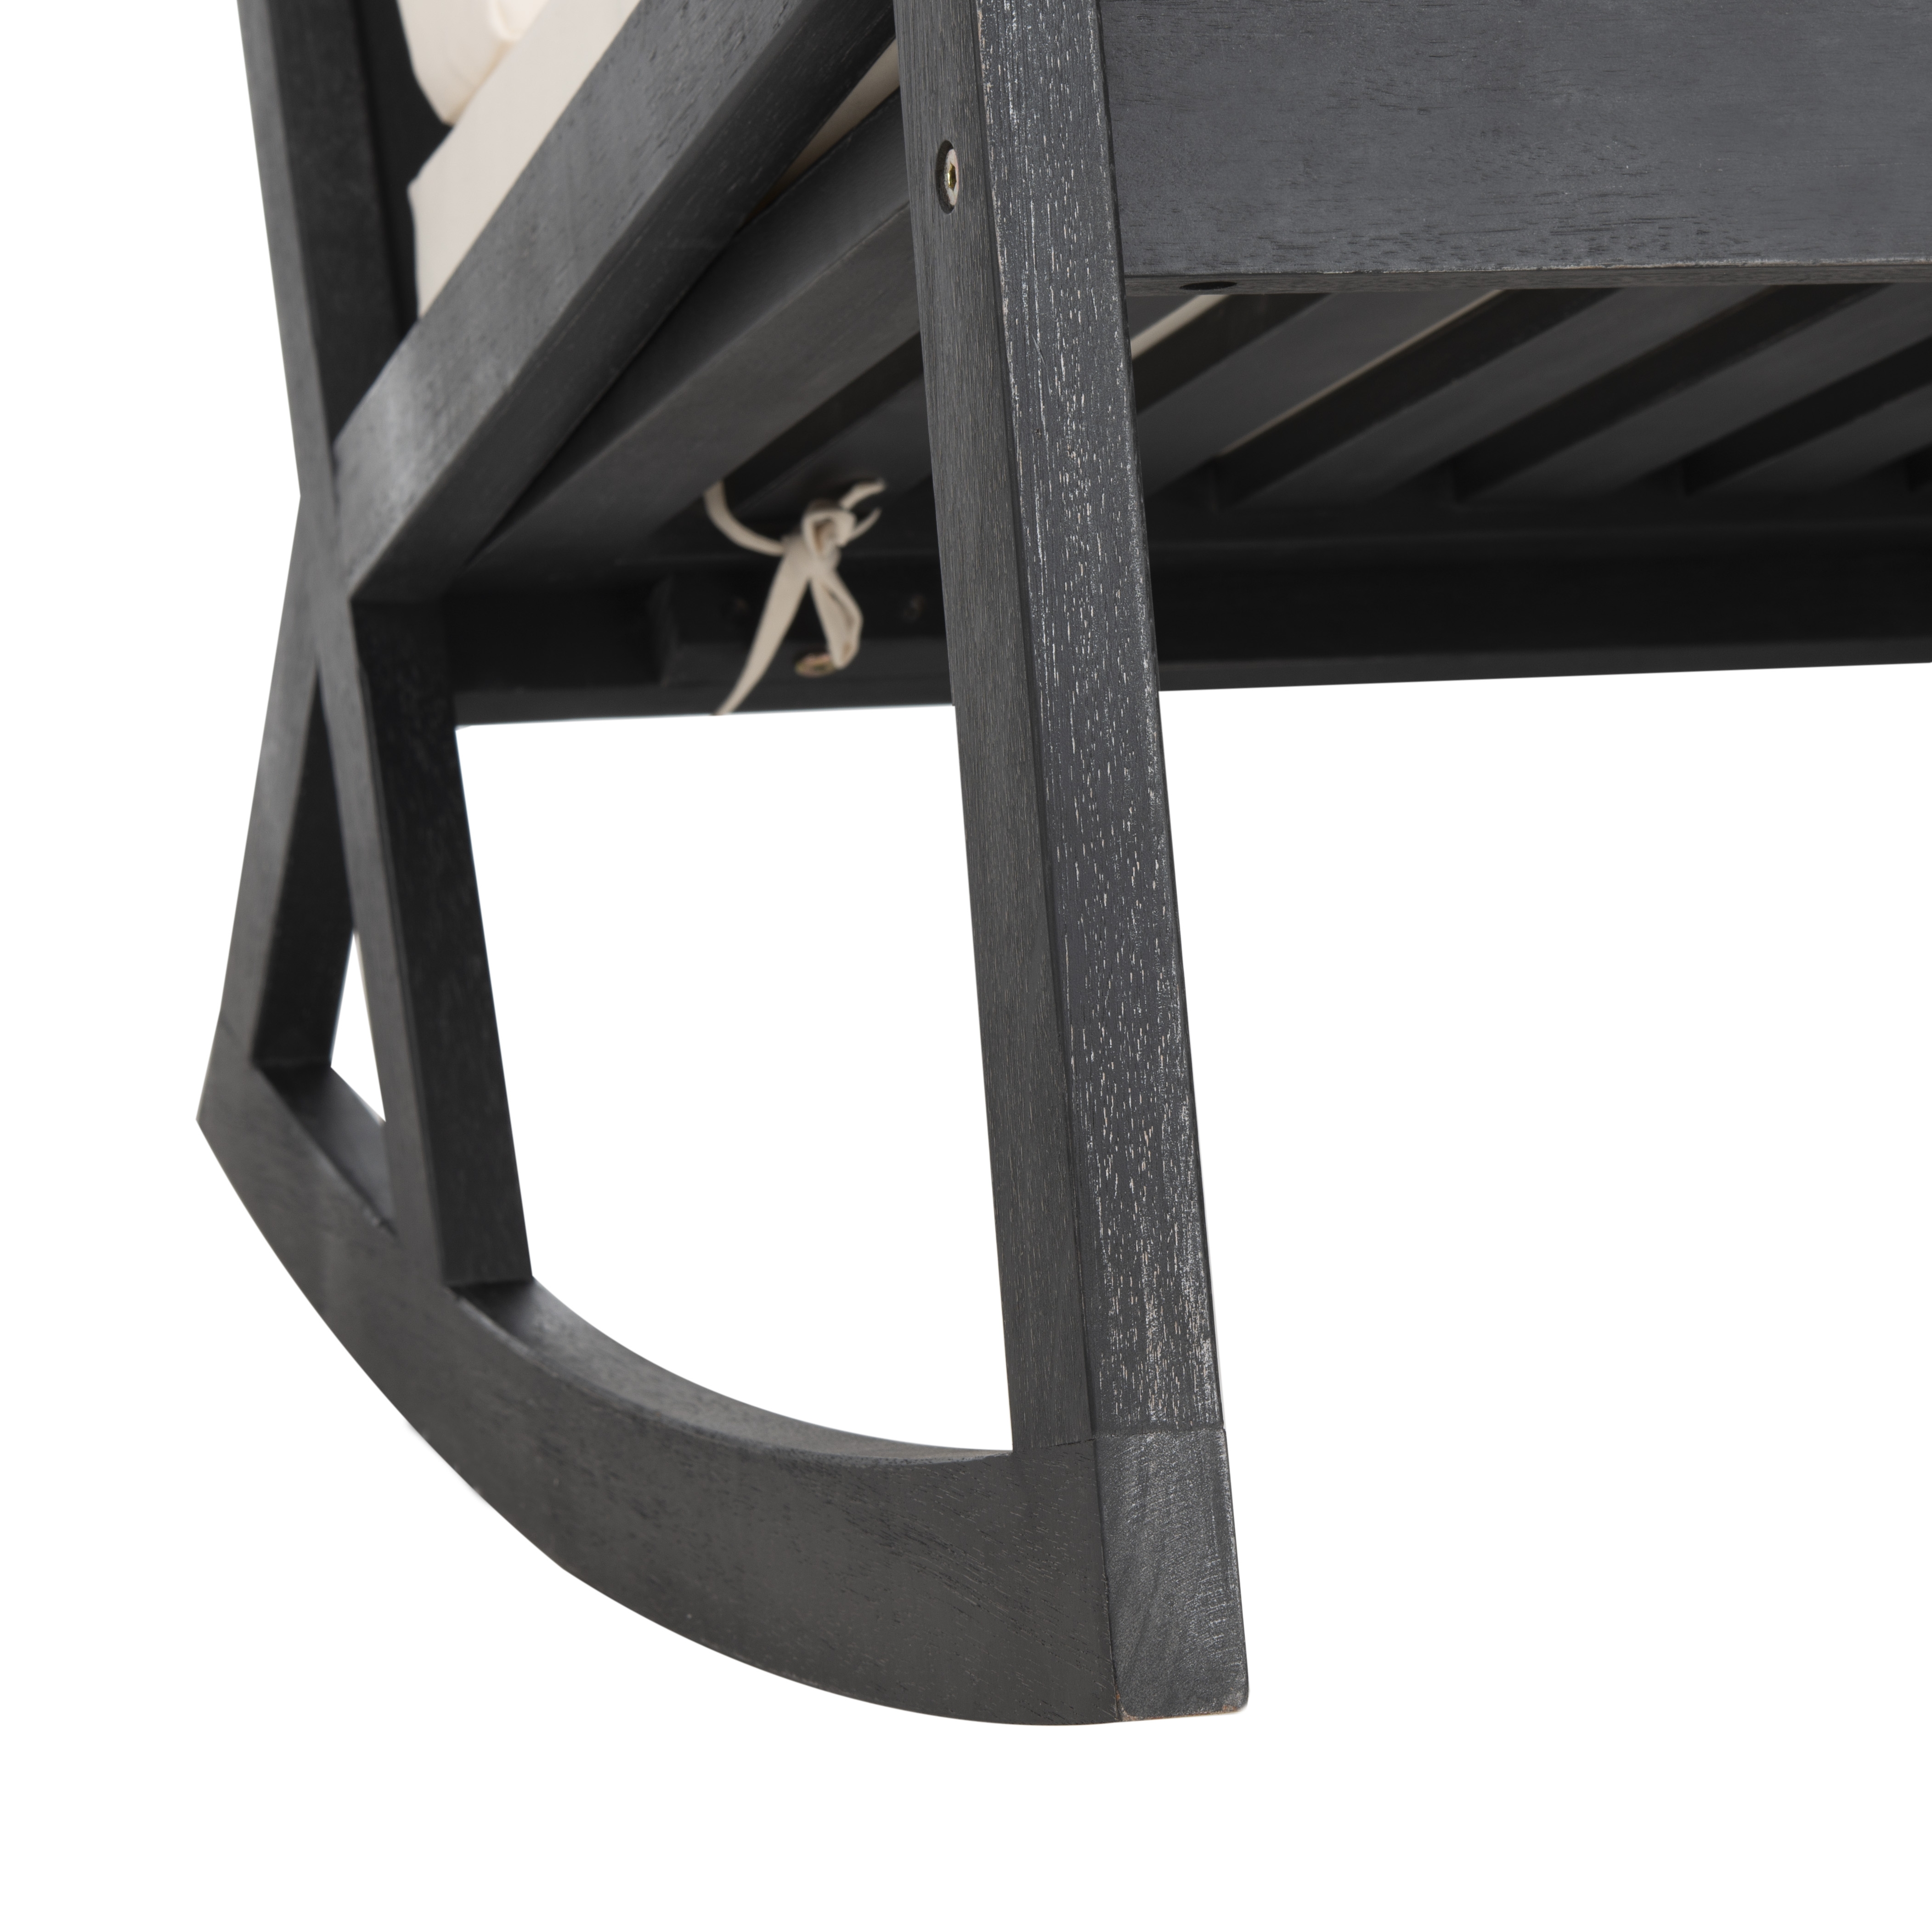 Vernon Rocking Chair - Black/White - Arlo Home - Image 6